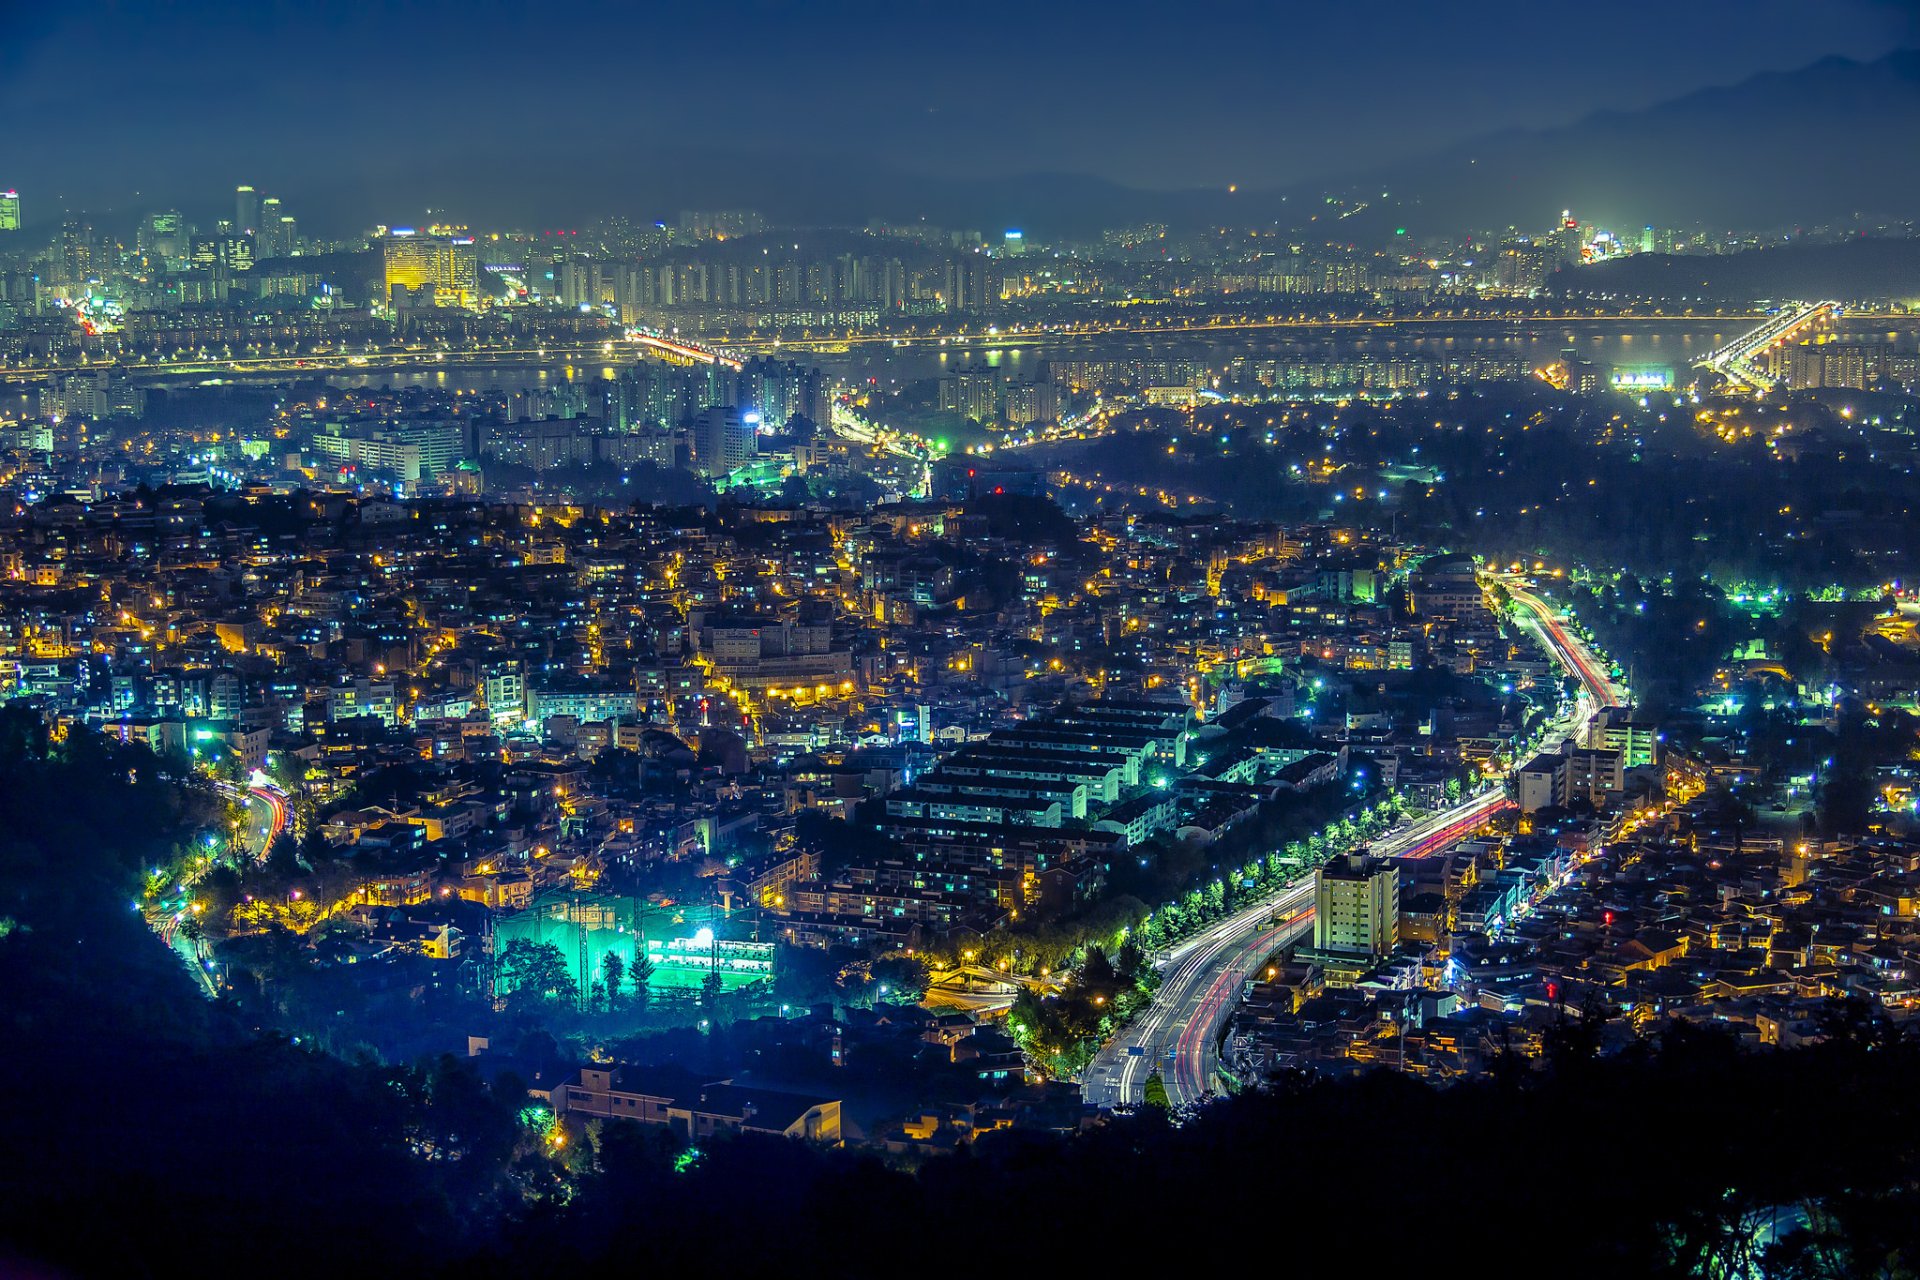 Dark Markets South Korea